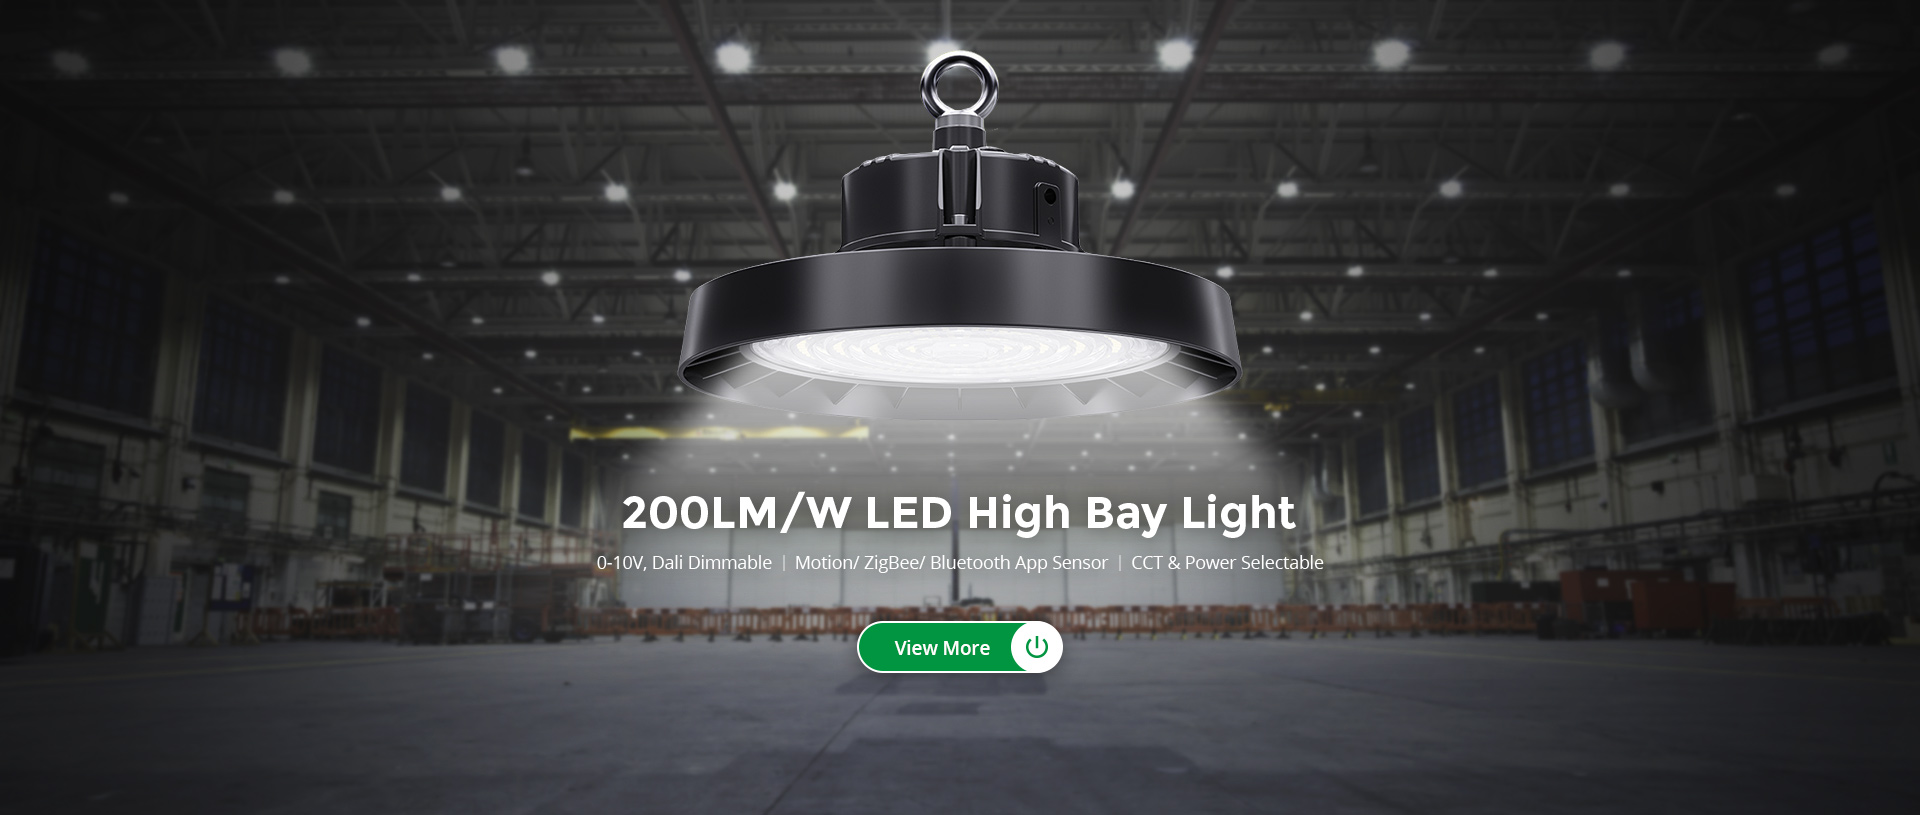 200LM/W LED High Bay Light- Dali Dimmable/ Motion Sensor/ ZigBee/ Bluetooth APP/ CCT & Power Selectable LED Highbay Light.